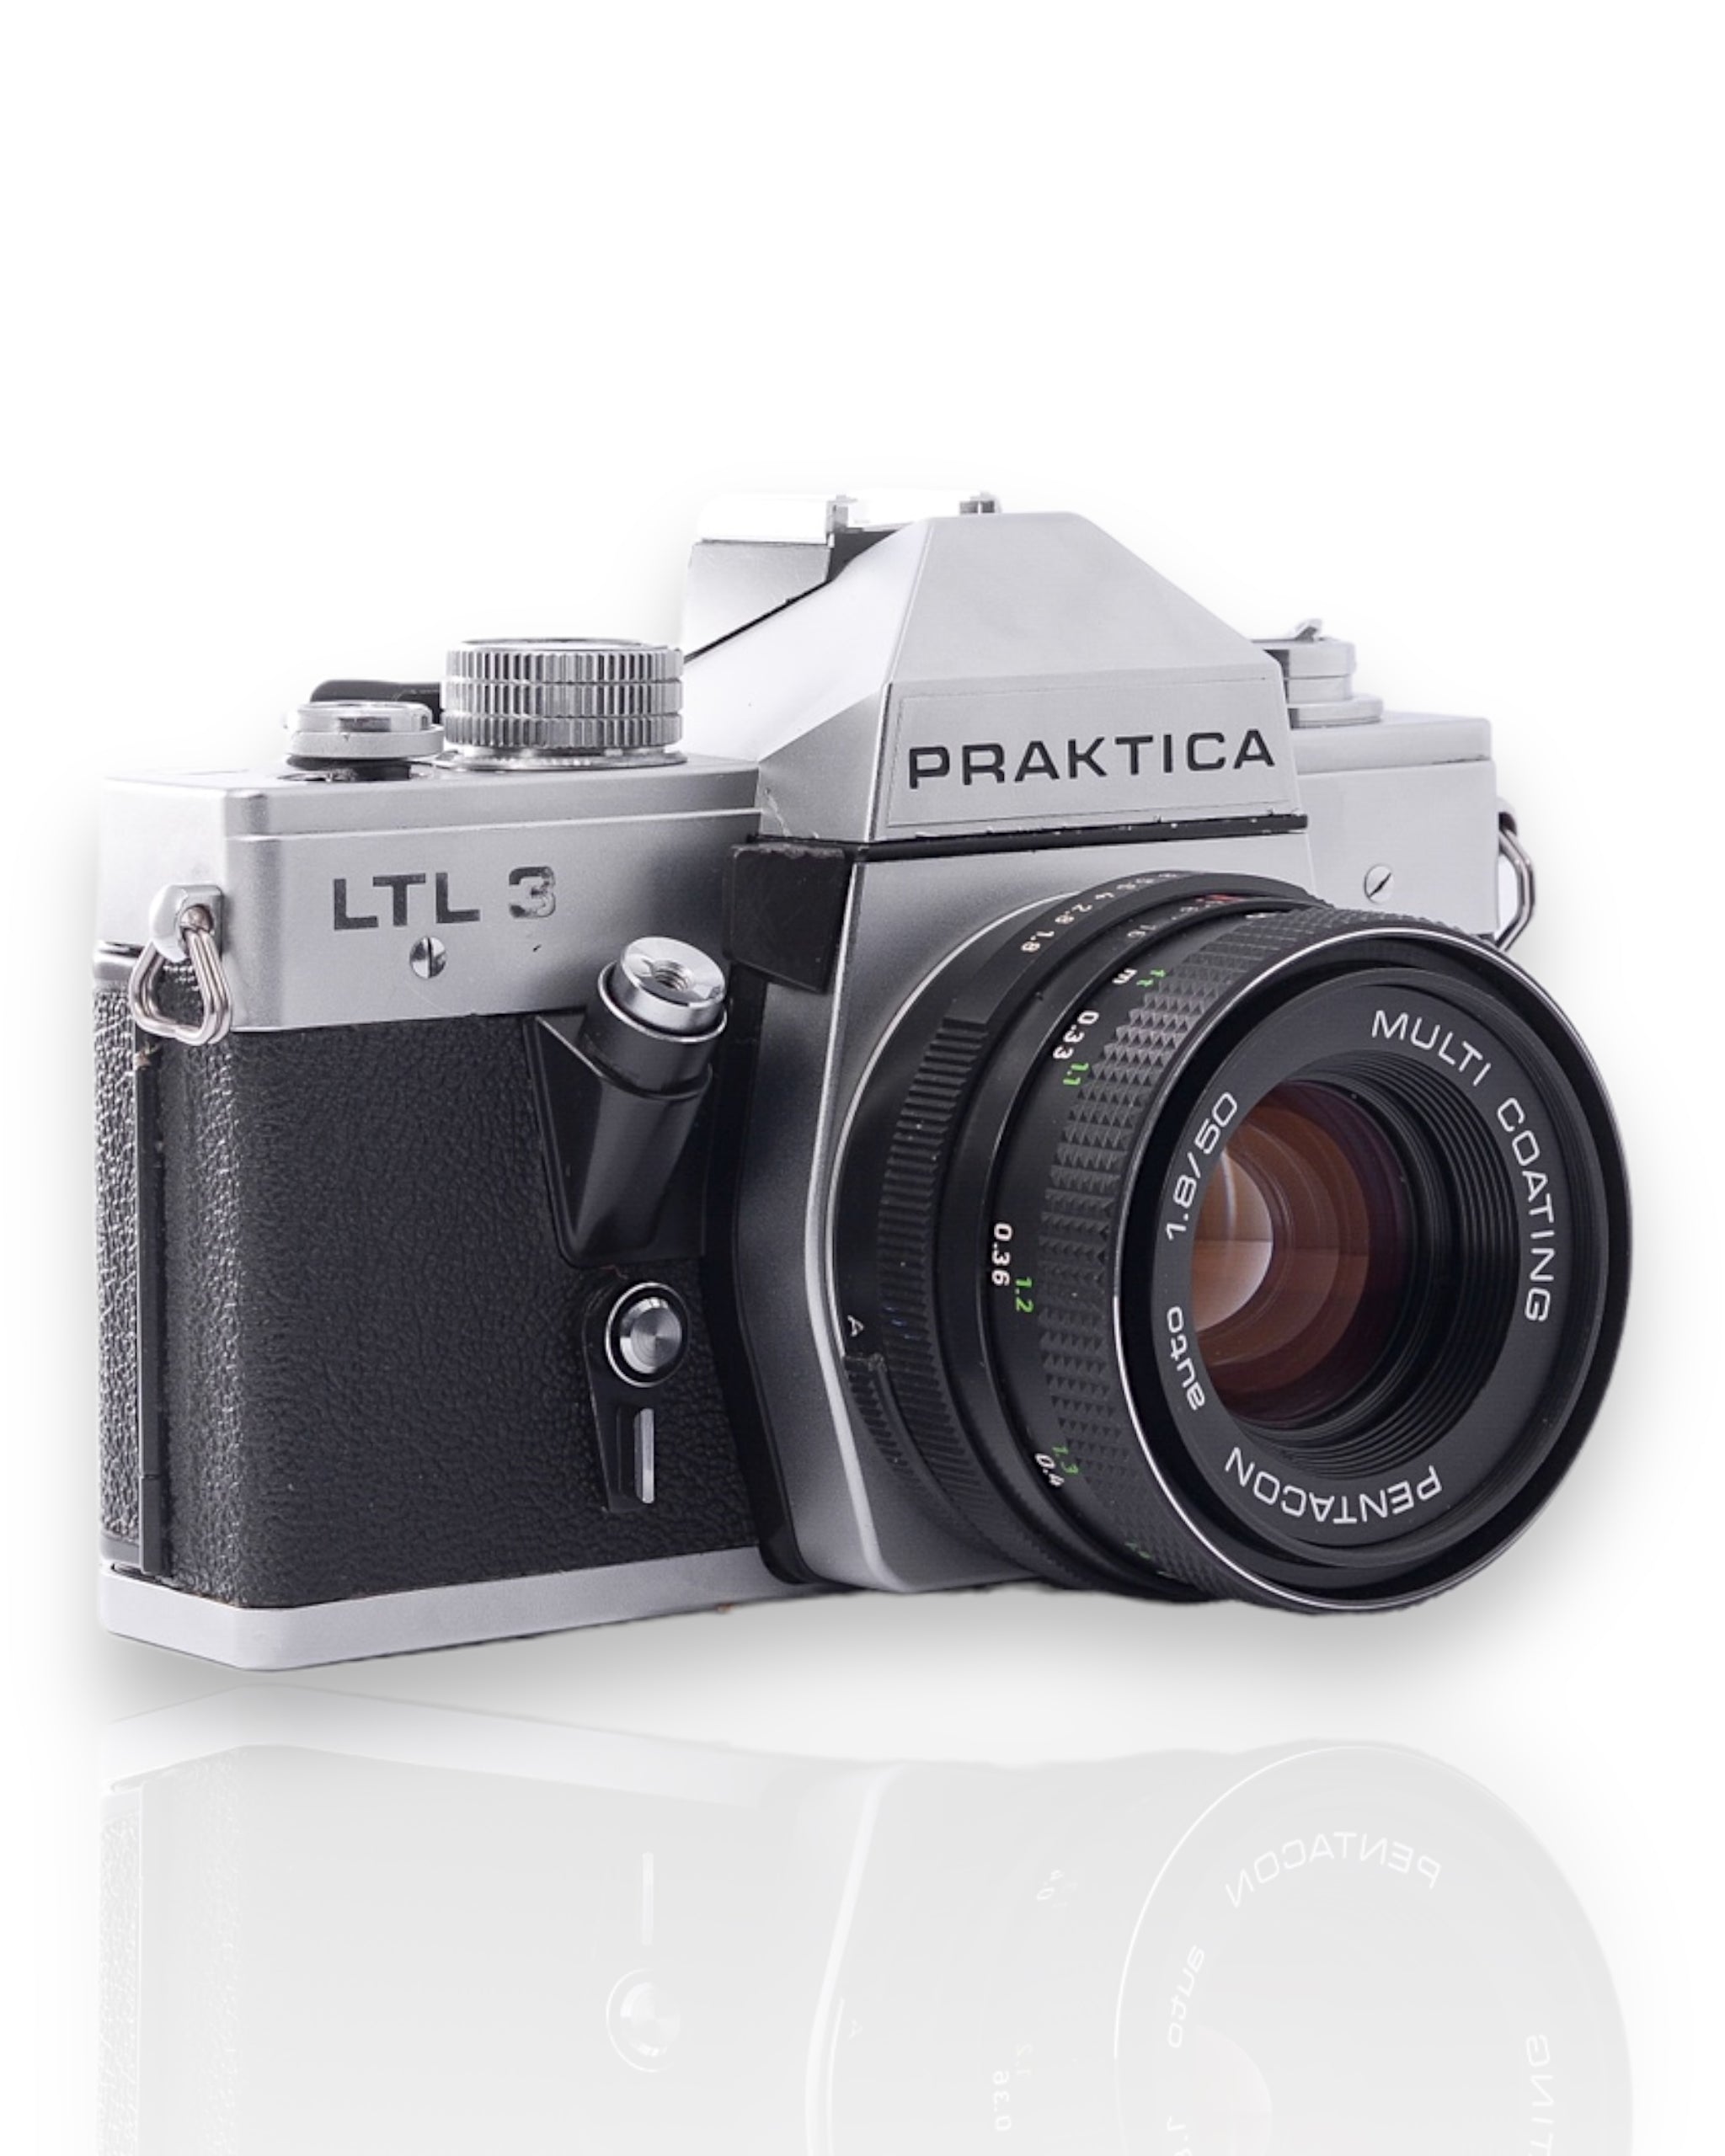 Praktica LTL 3 35mm SLR Film Camera with 50mm f1.8 Lens - Mori 